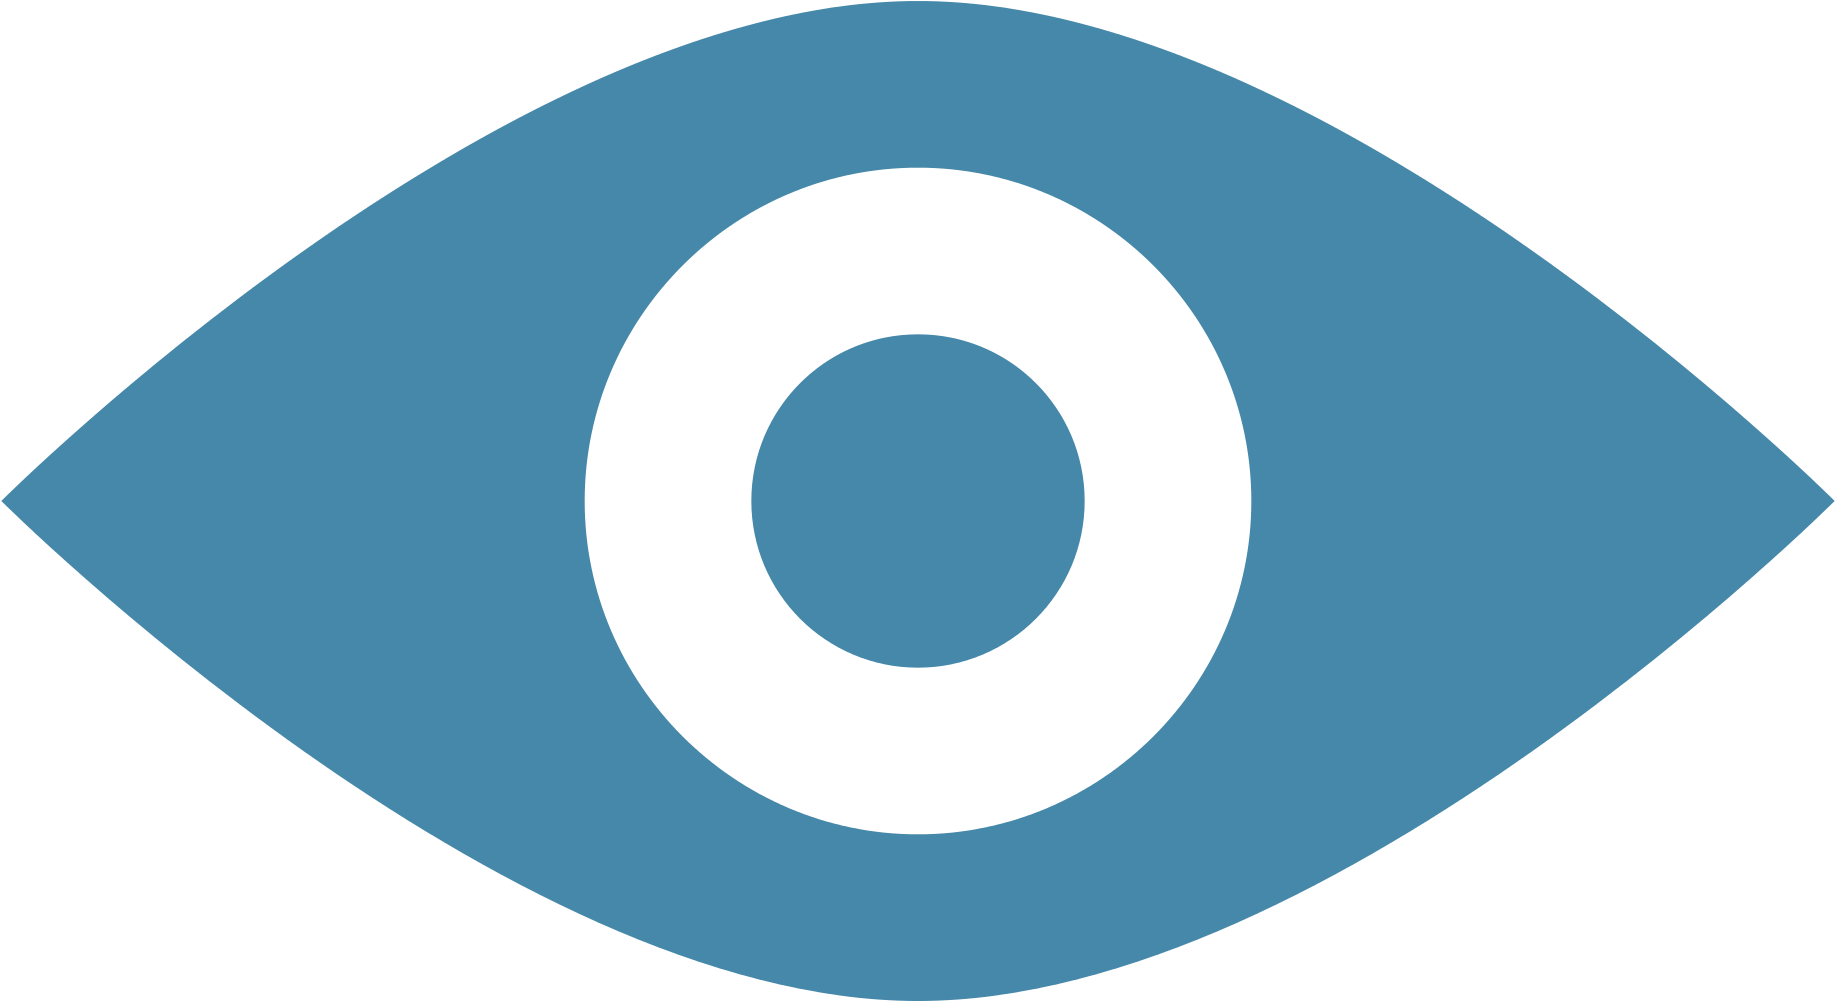 File - Wikifont Unie010 - Eye - Blue - Svg - Market Share (2000x2000)